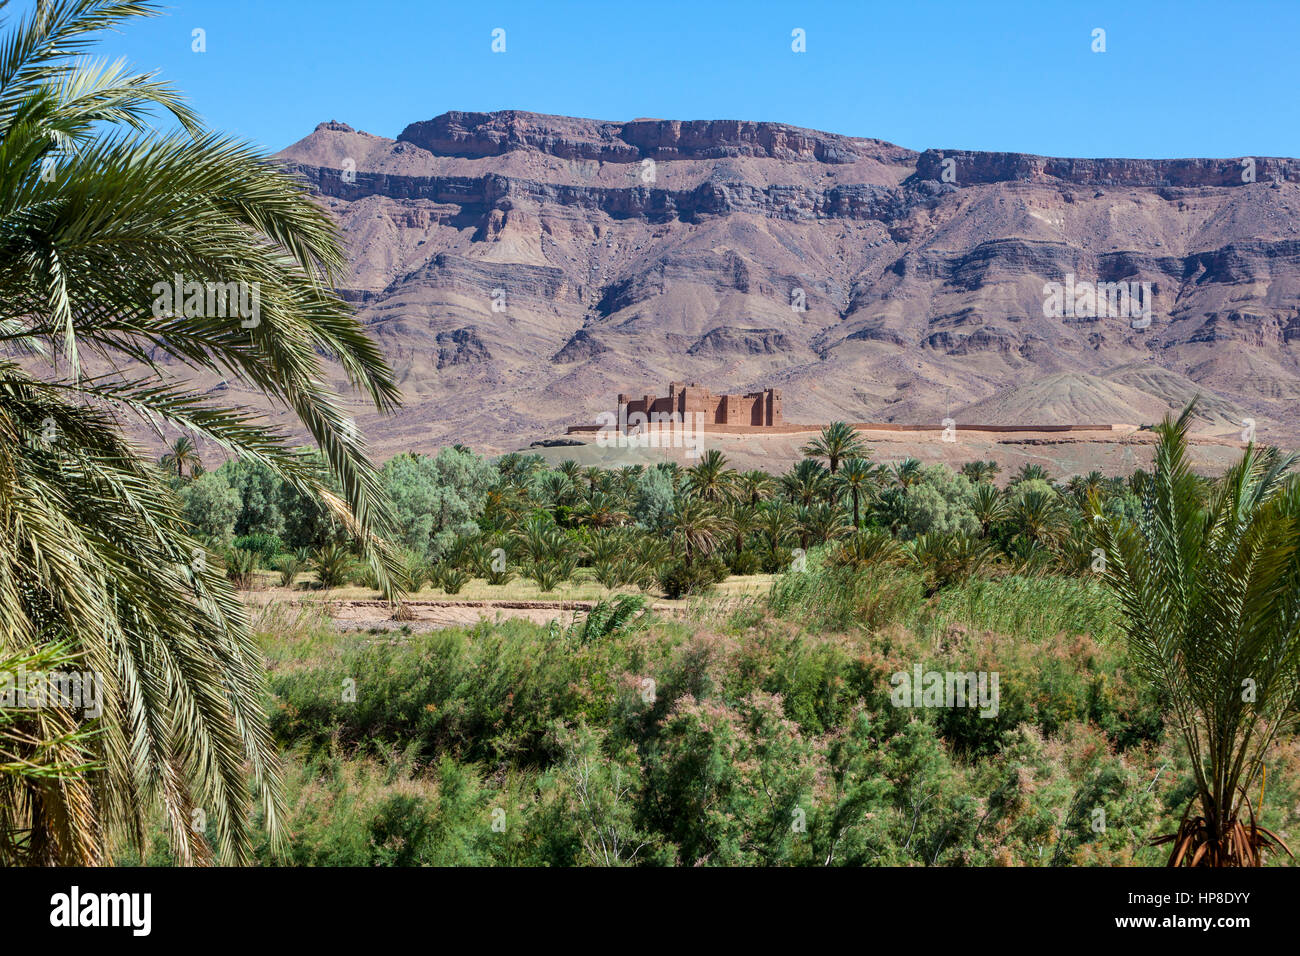 Draa River Valley Szene, Marokko.  Ksar (Kasbah) Tamnougalt, in der Nähe von Agdz. Stockfoto